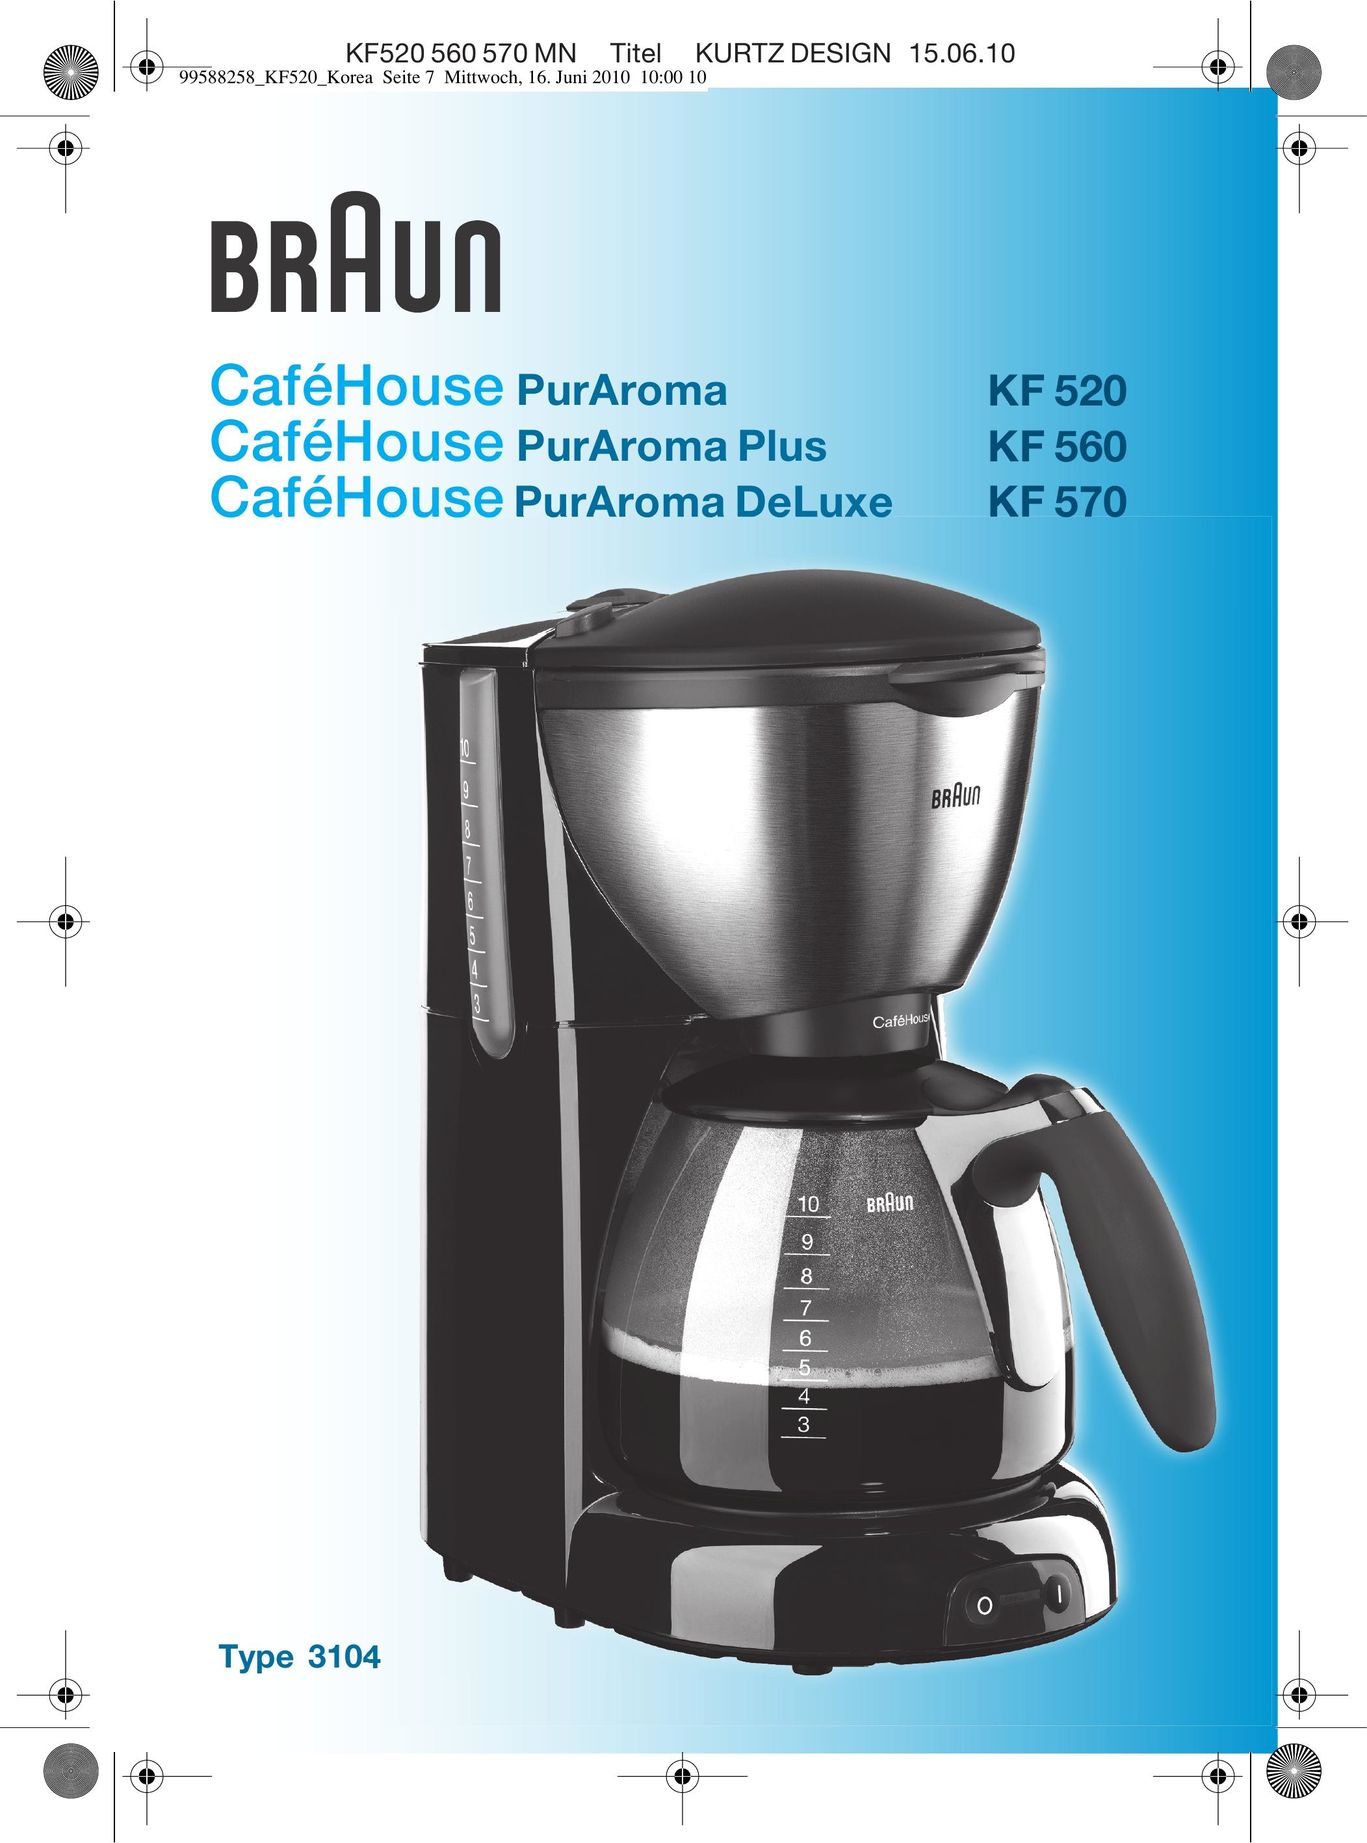 Braun KF 570 Coffeemaker User Manual